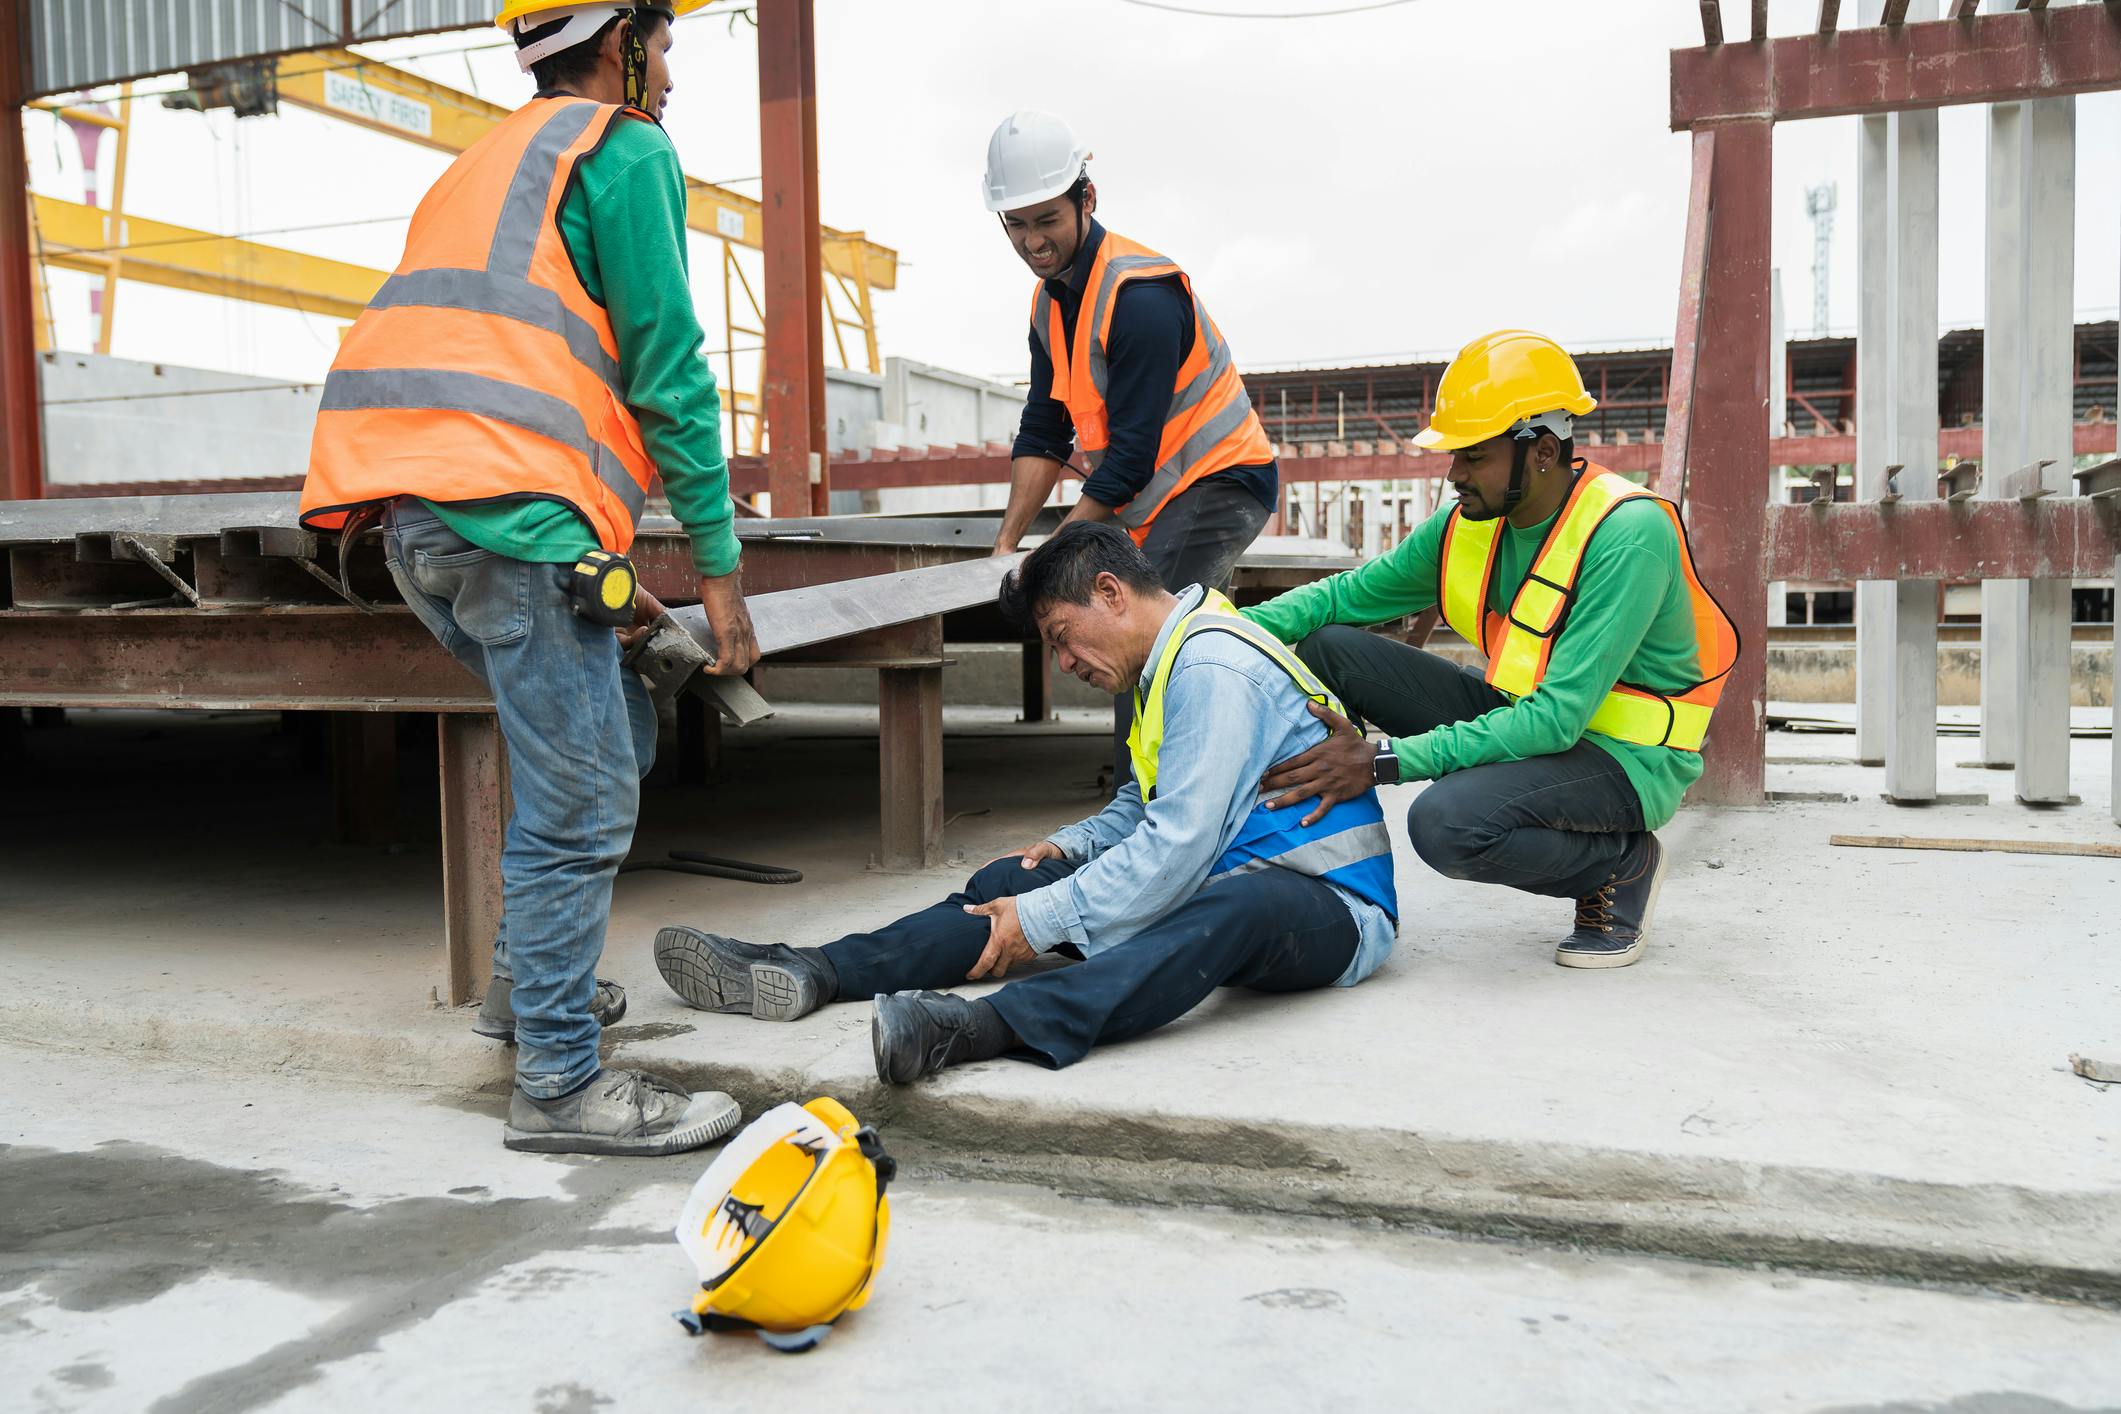 Injured construction worker